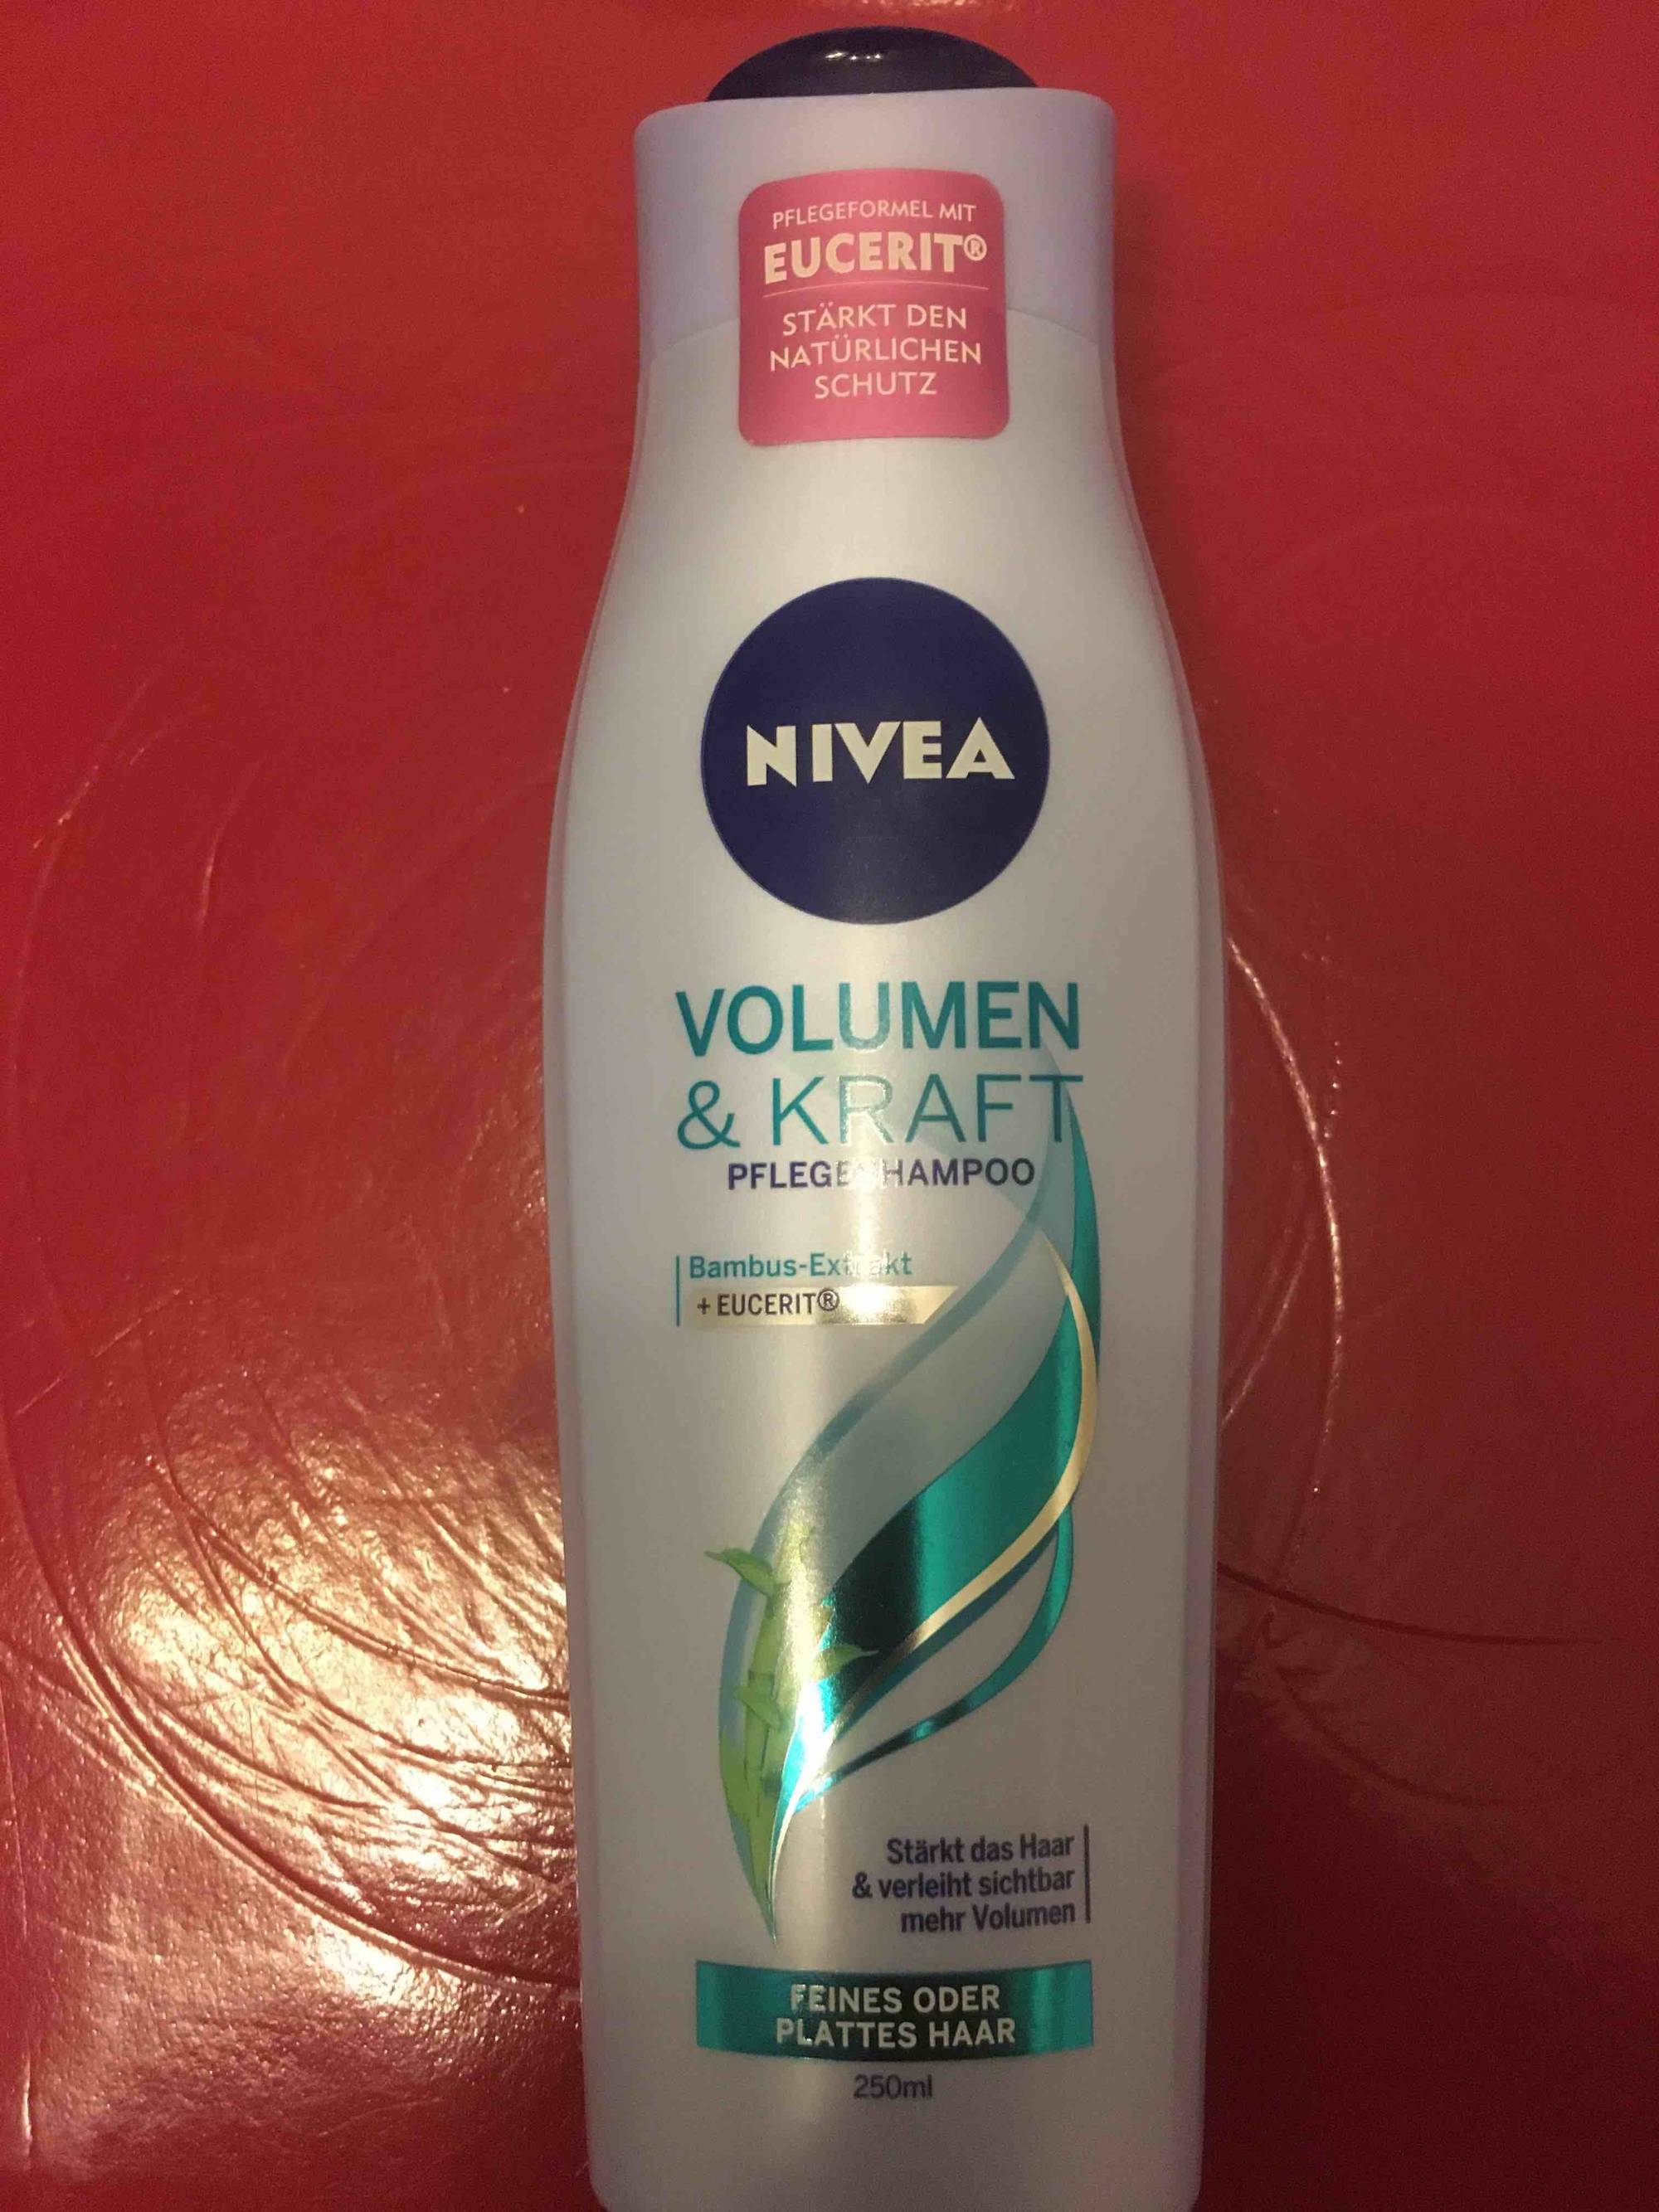 NIVEA - Volumen & kraft - Pflege shampoo